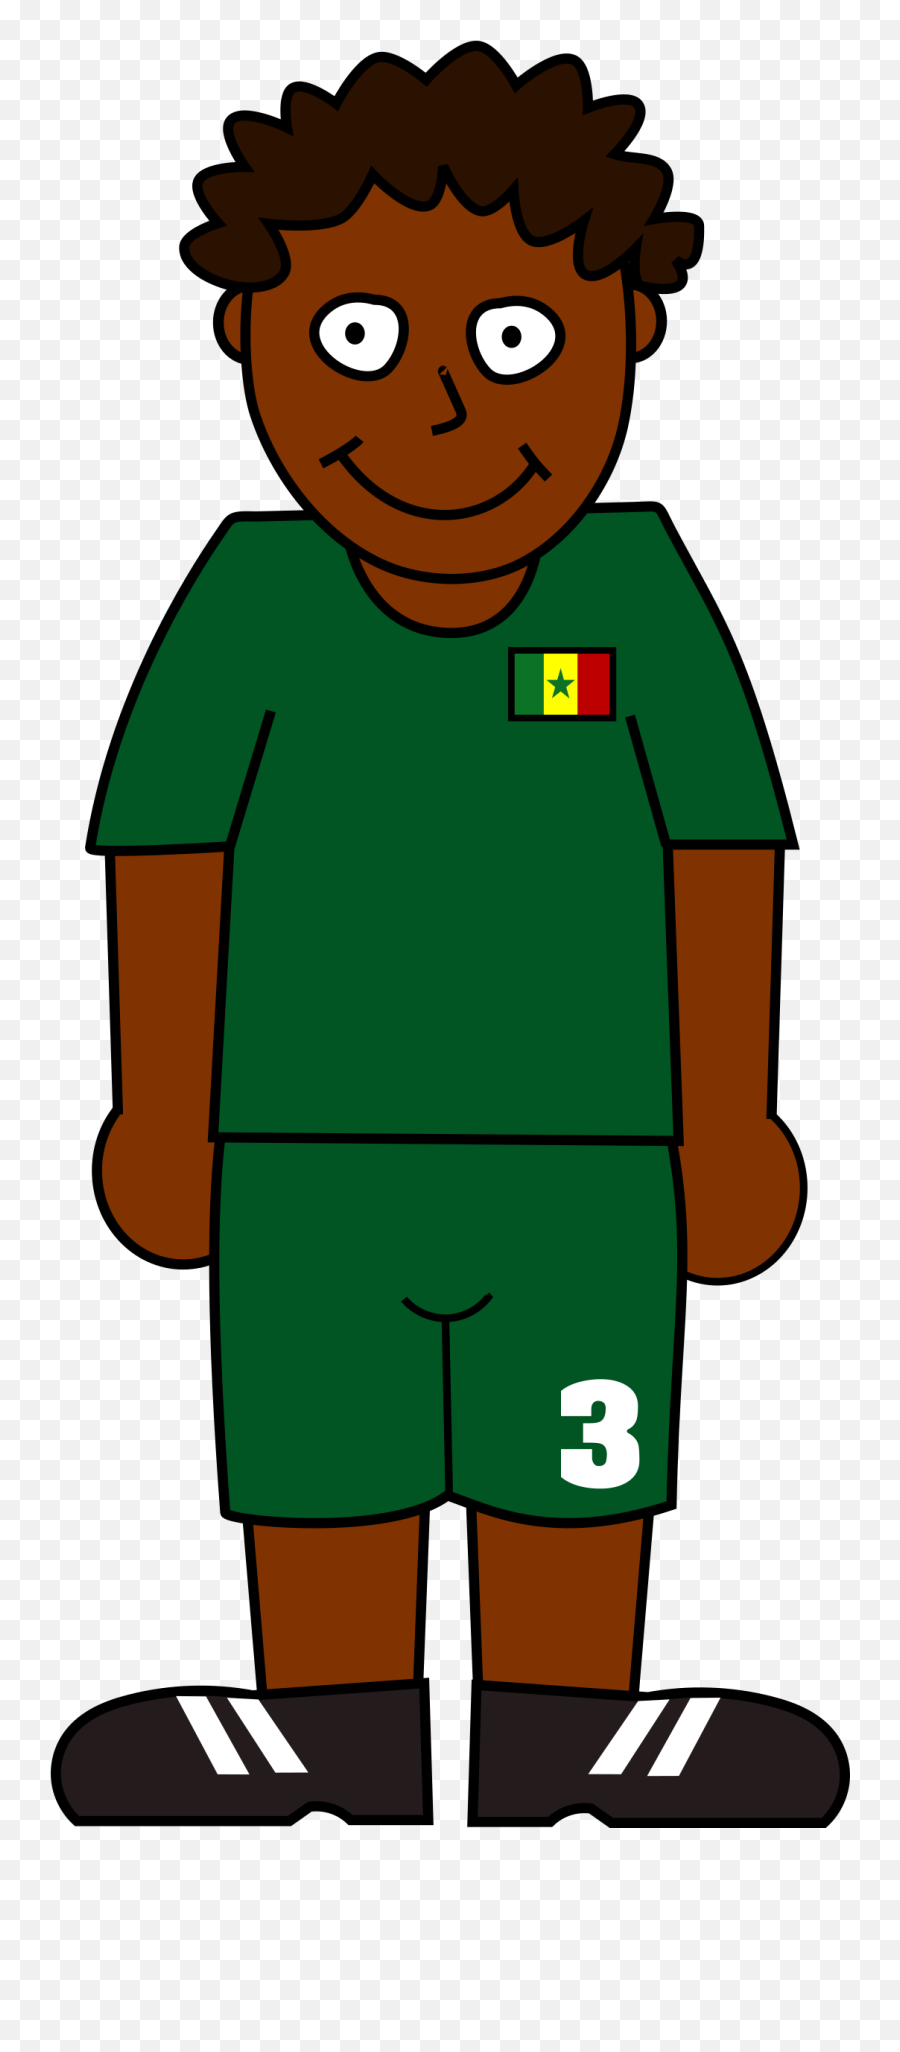 Download Hd Football Player Senegal Clipart Library Library Emoji,Football Player Clipart